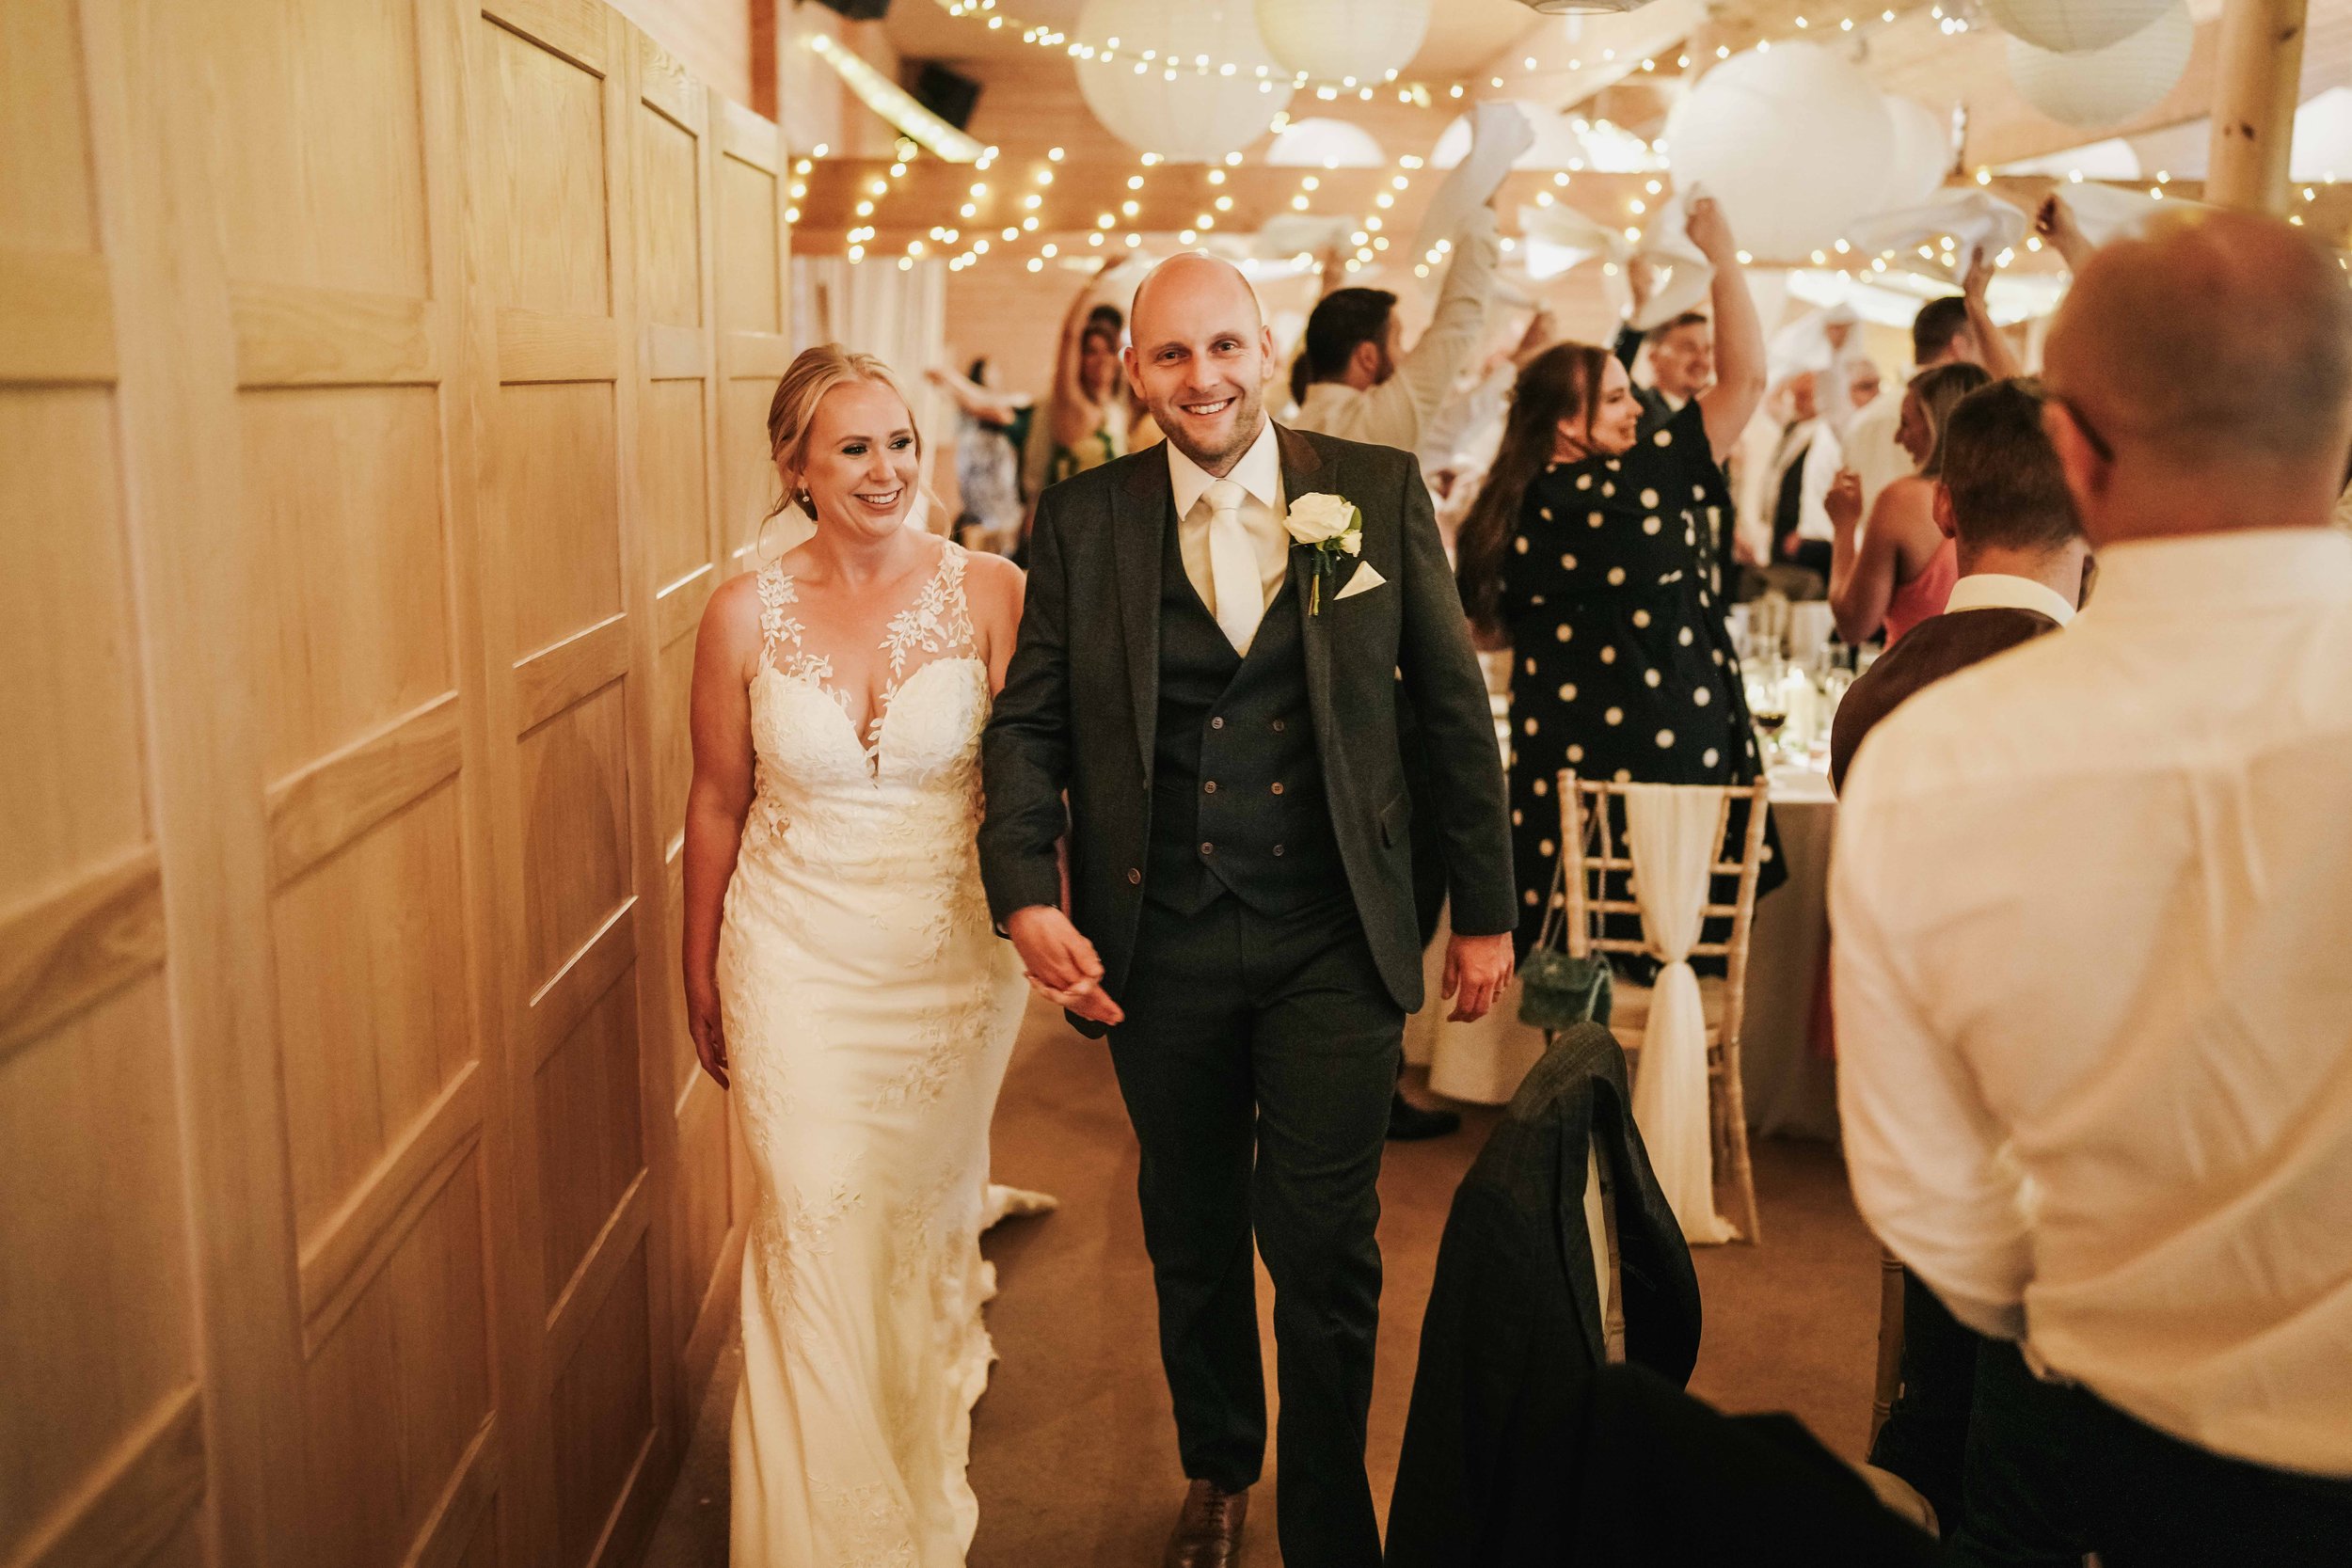 Styal Lodge wedding photography cheshire - 031.jpg